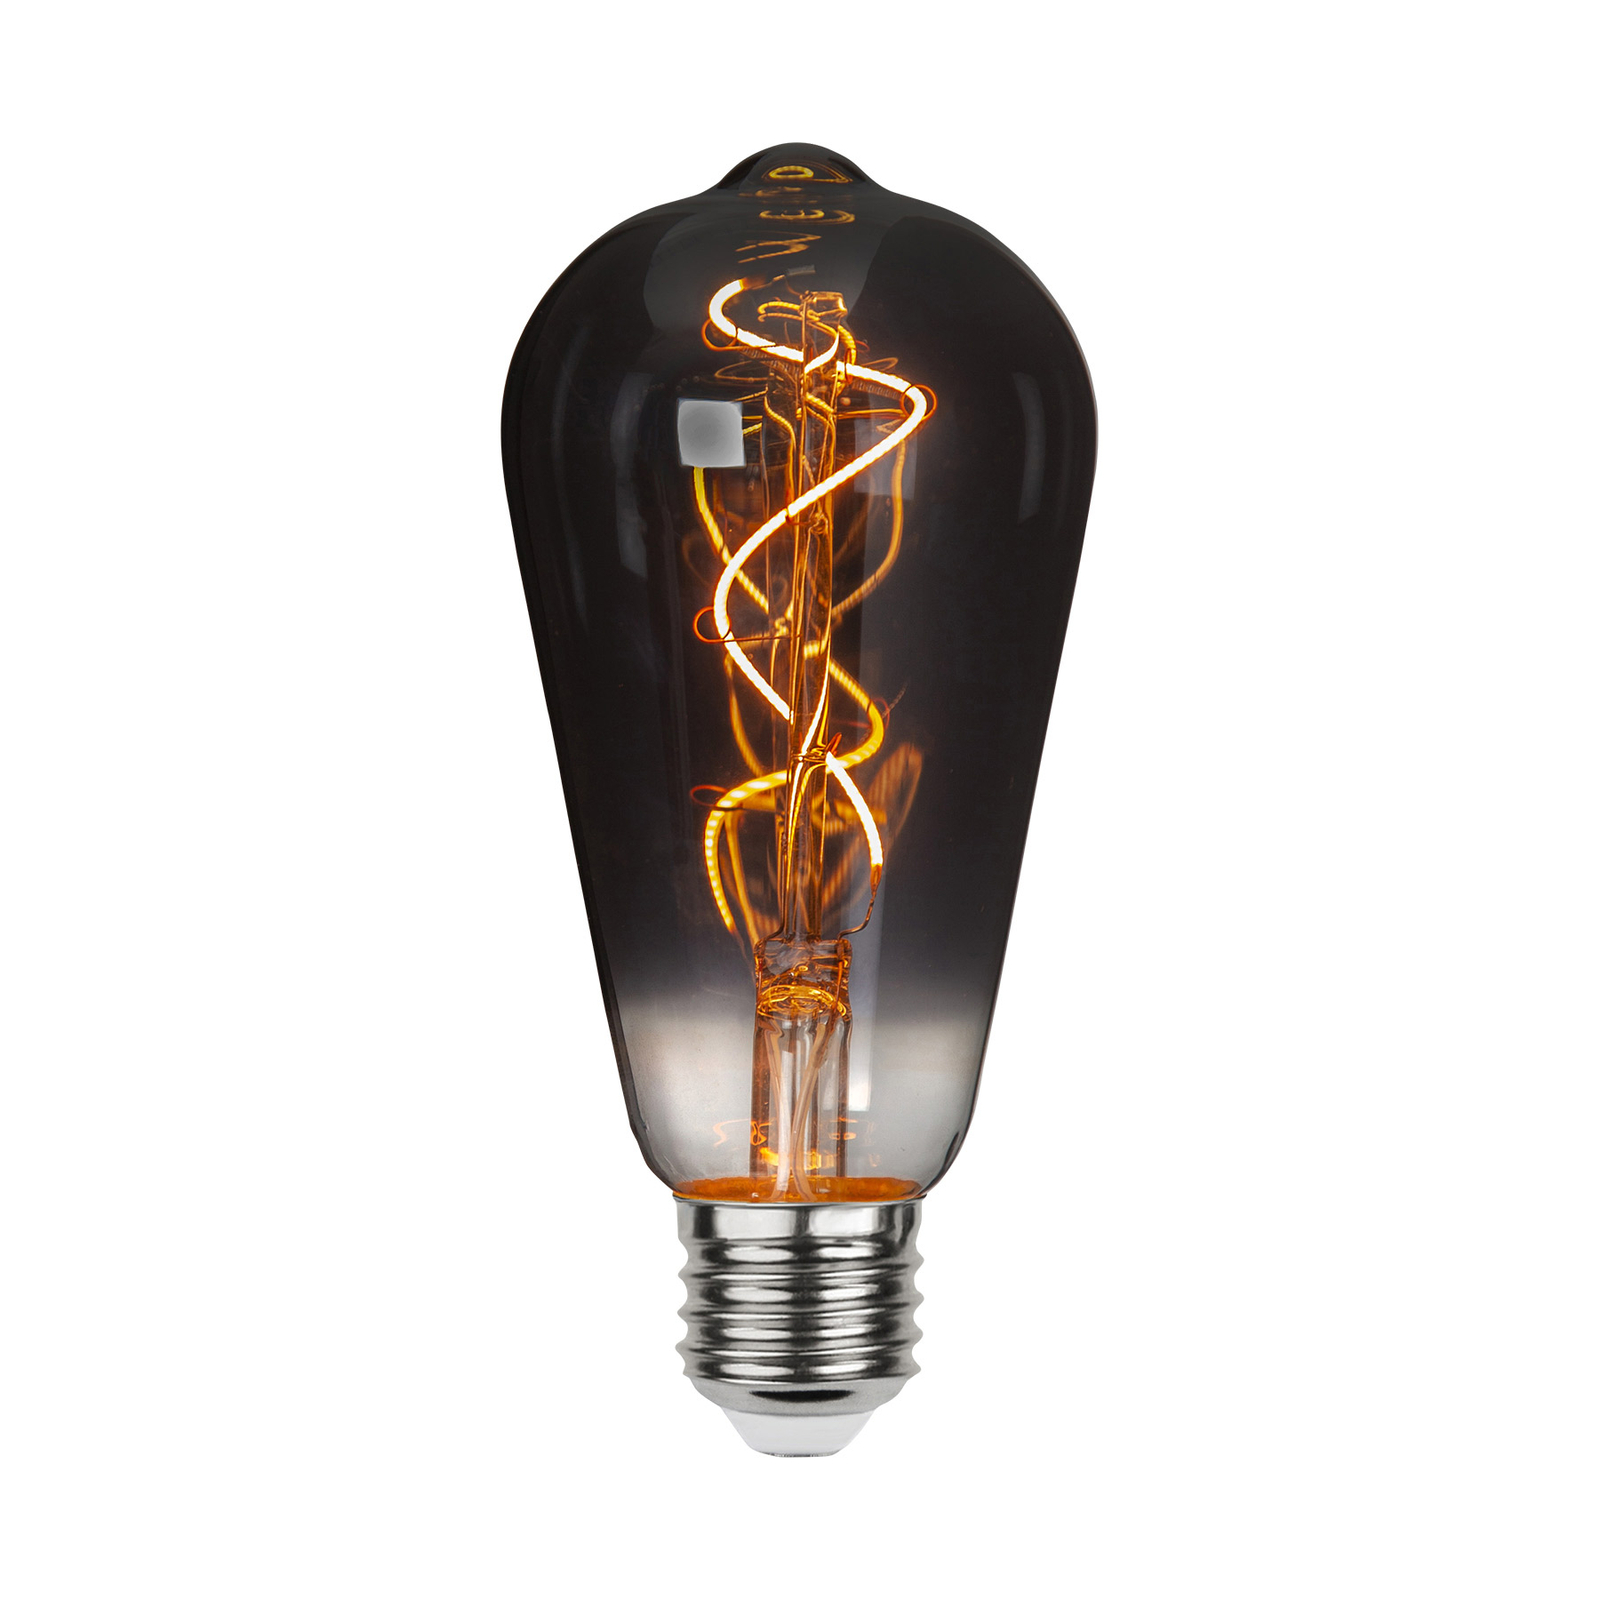 Filament LED bulb ST64 E27 3W 1,800K smoked glass